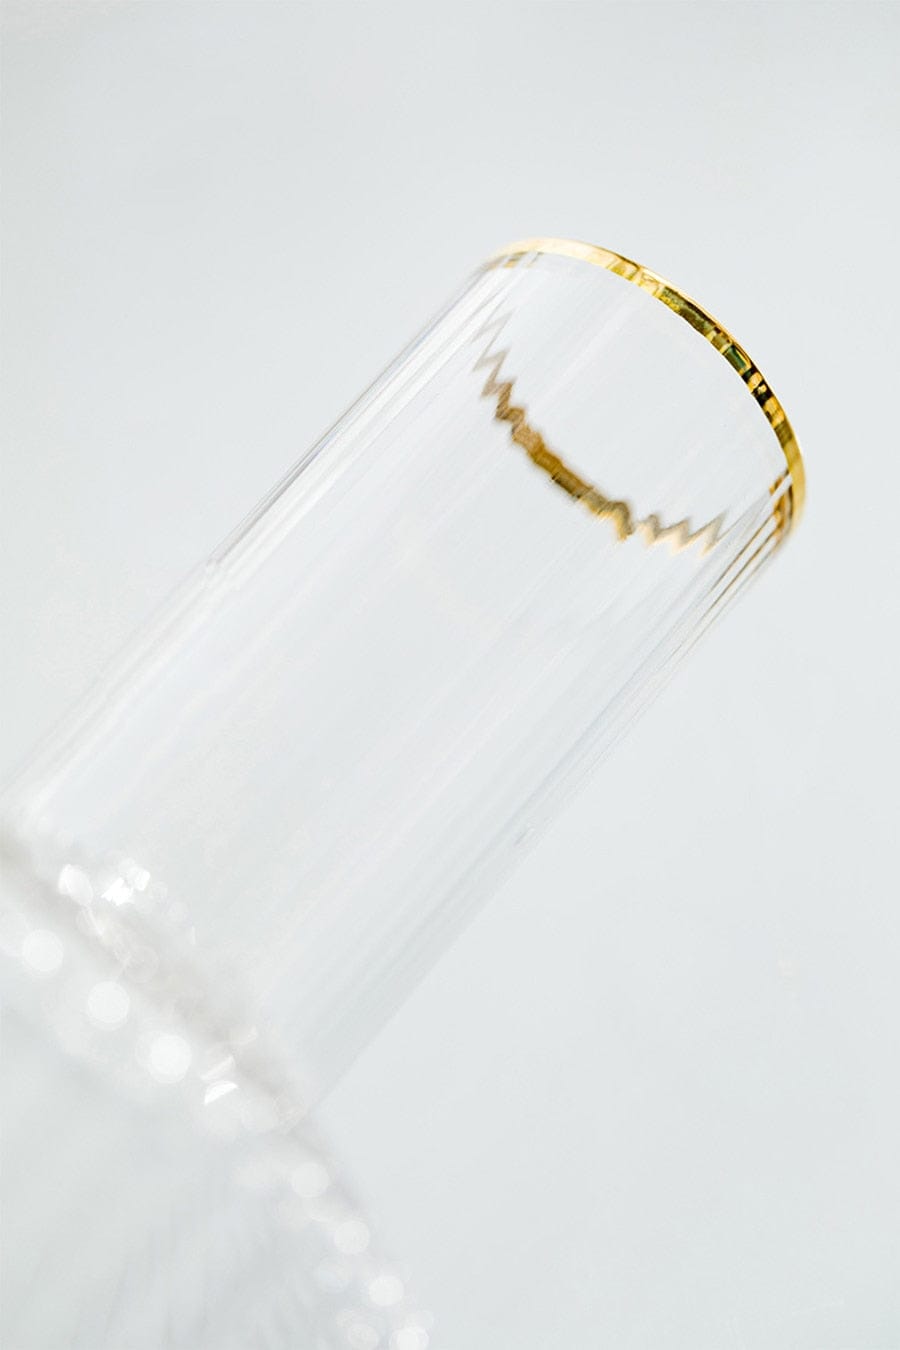 Crystal Ribbed Gold Rim Glass Set - CIR Designs